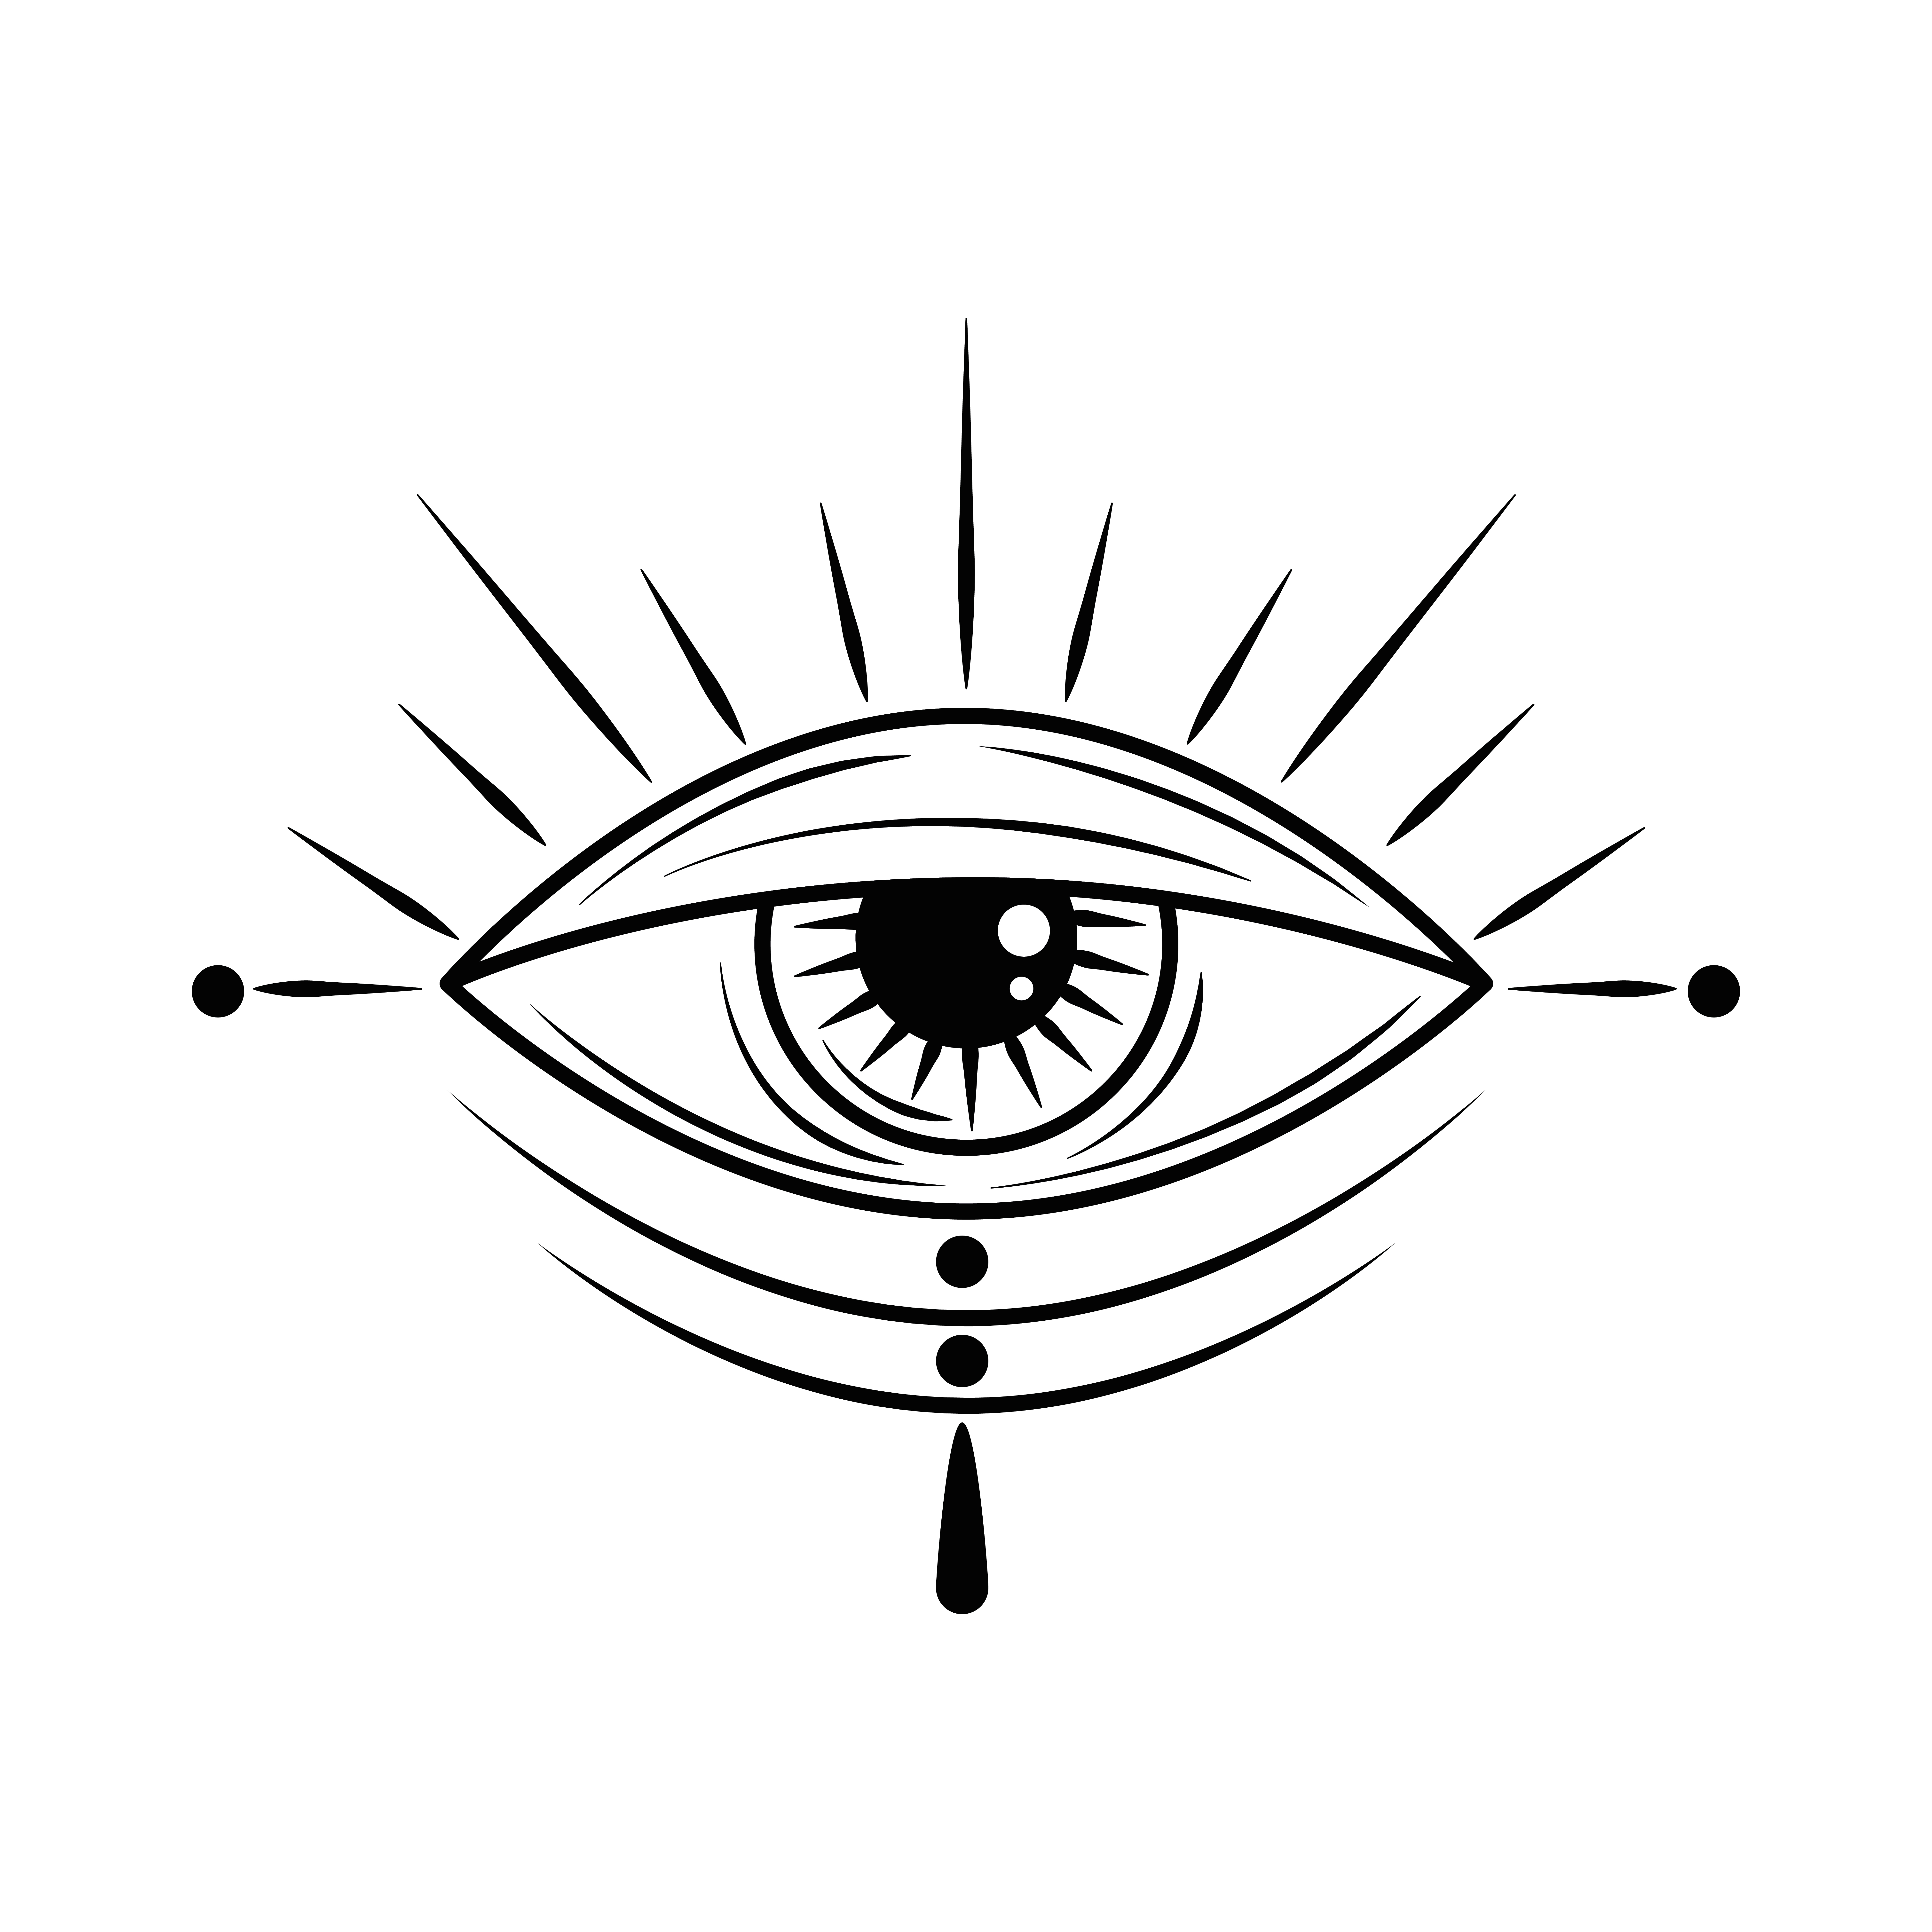 Spiritual guru tattoos eye on forehead for enlightenment